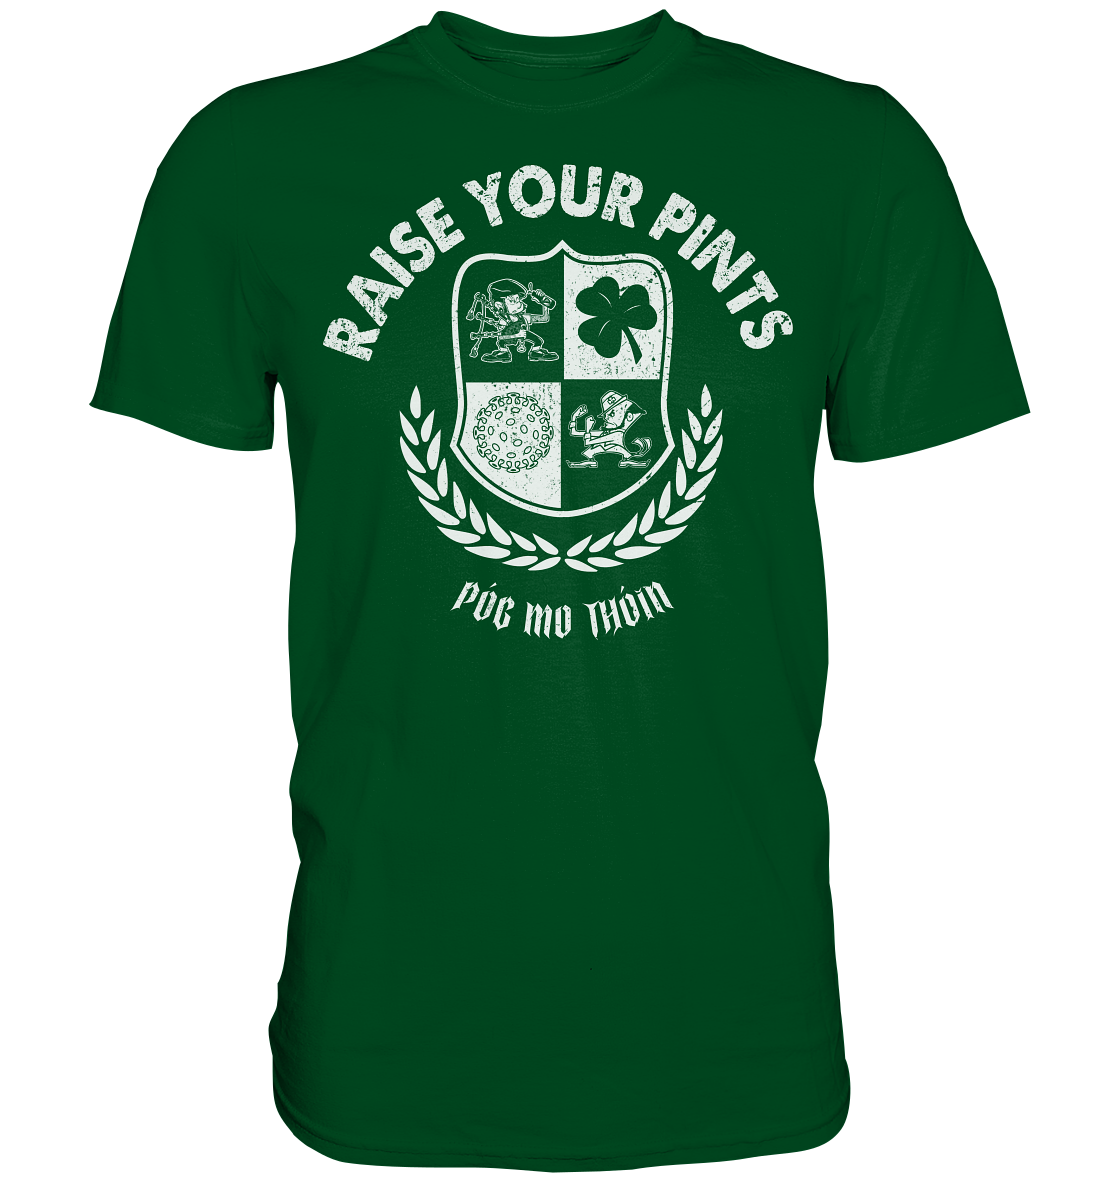 Raise Your Pints "Póg Mo Thóin" - Premium Shirt